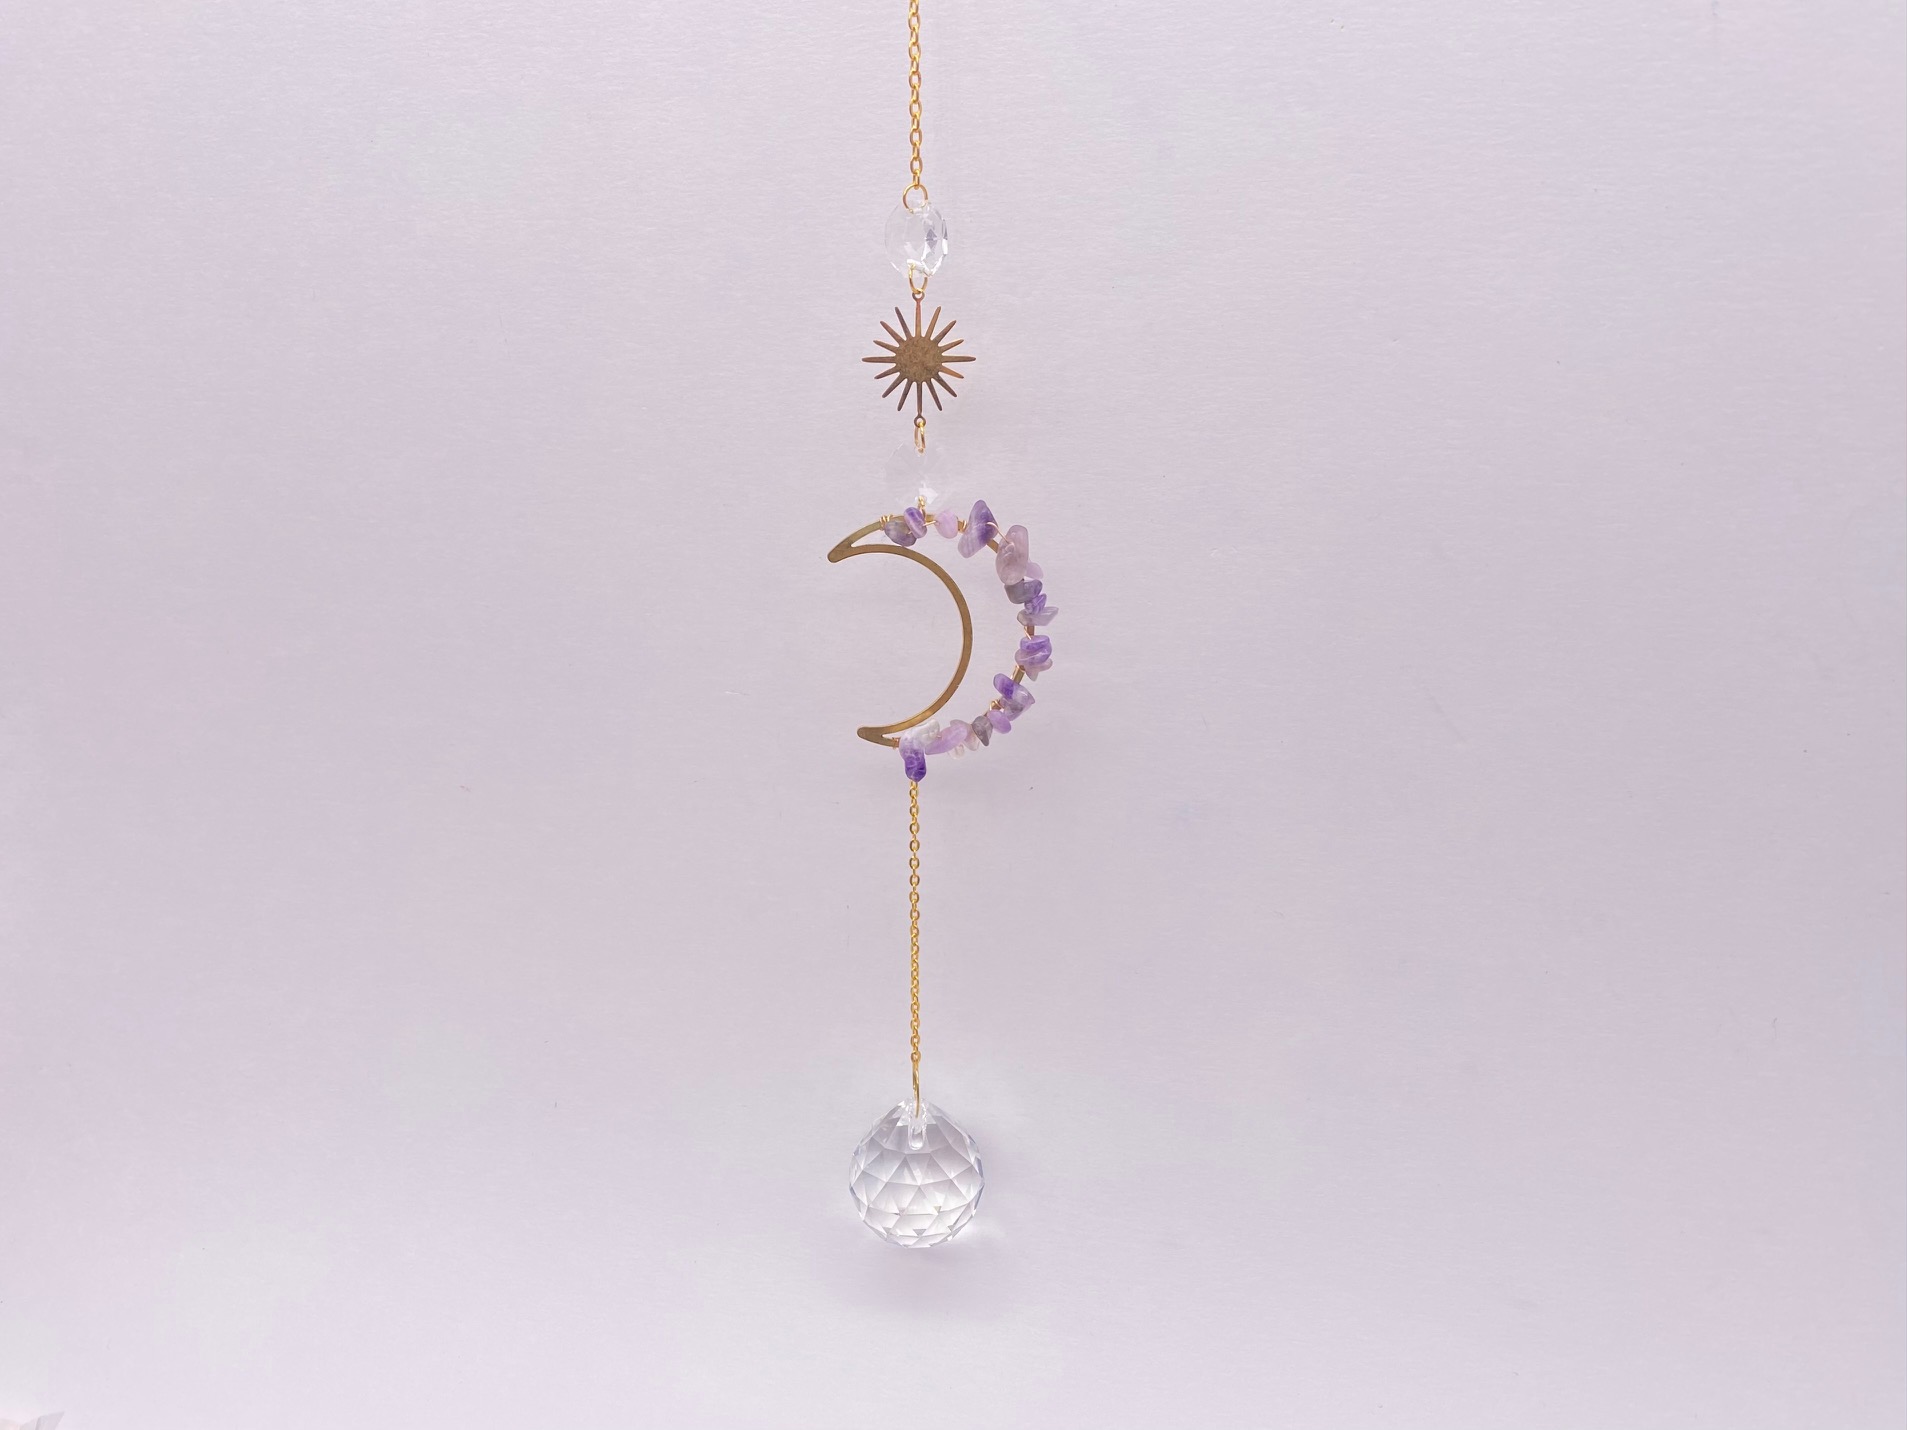 Suncatcher – Gold Crescent Moon & Sun Charms with Iridescent Beads